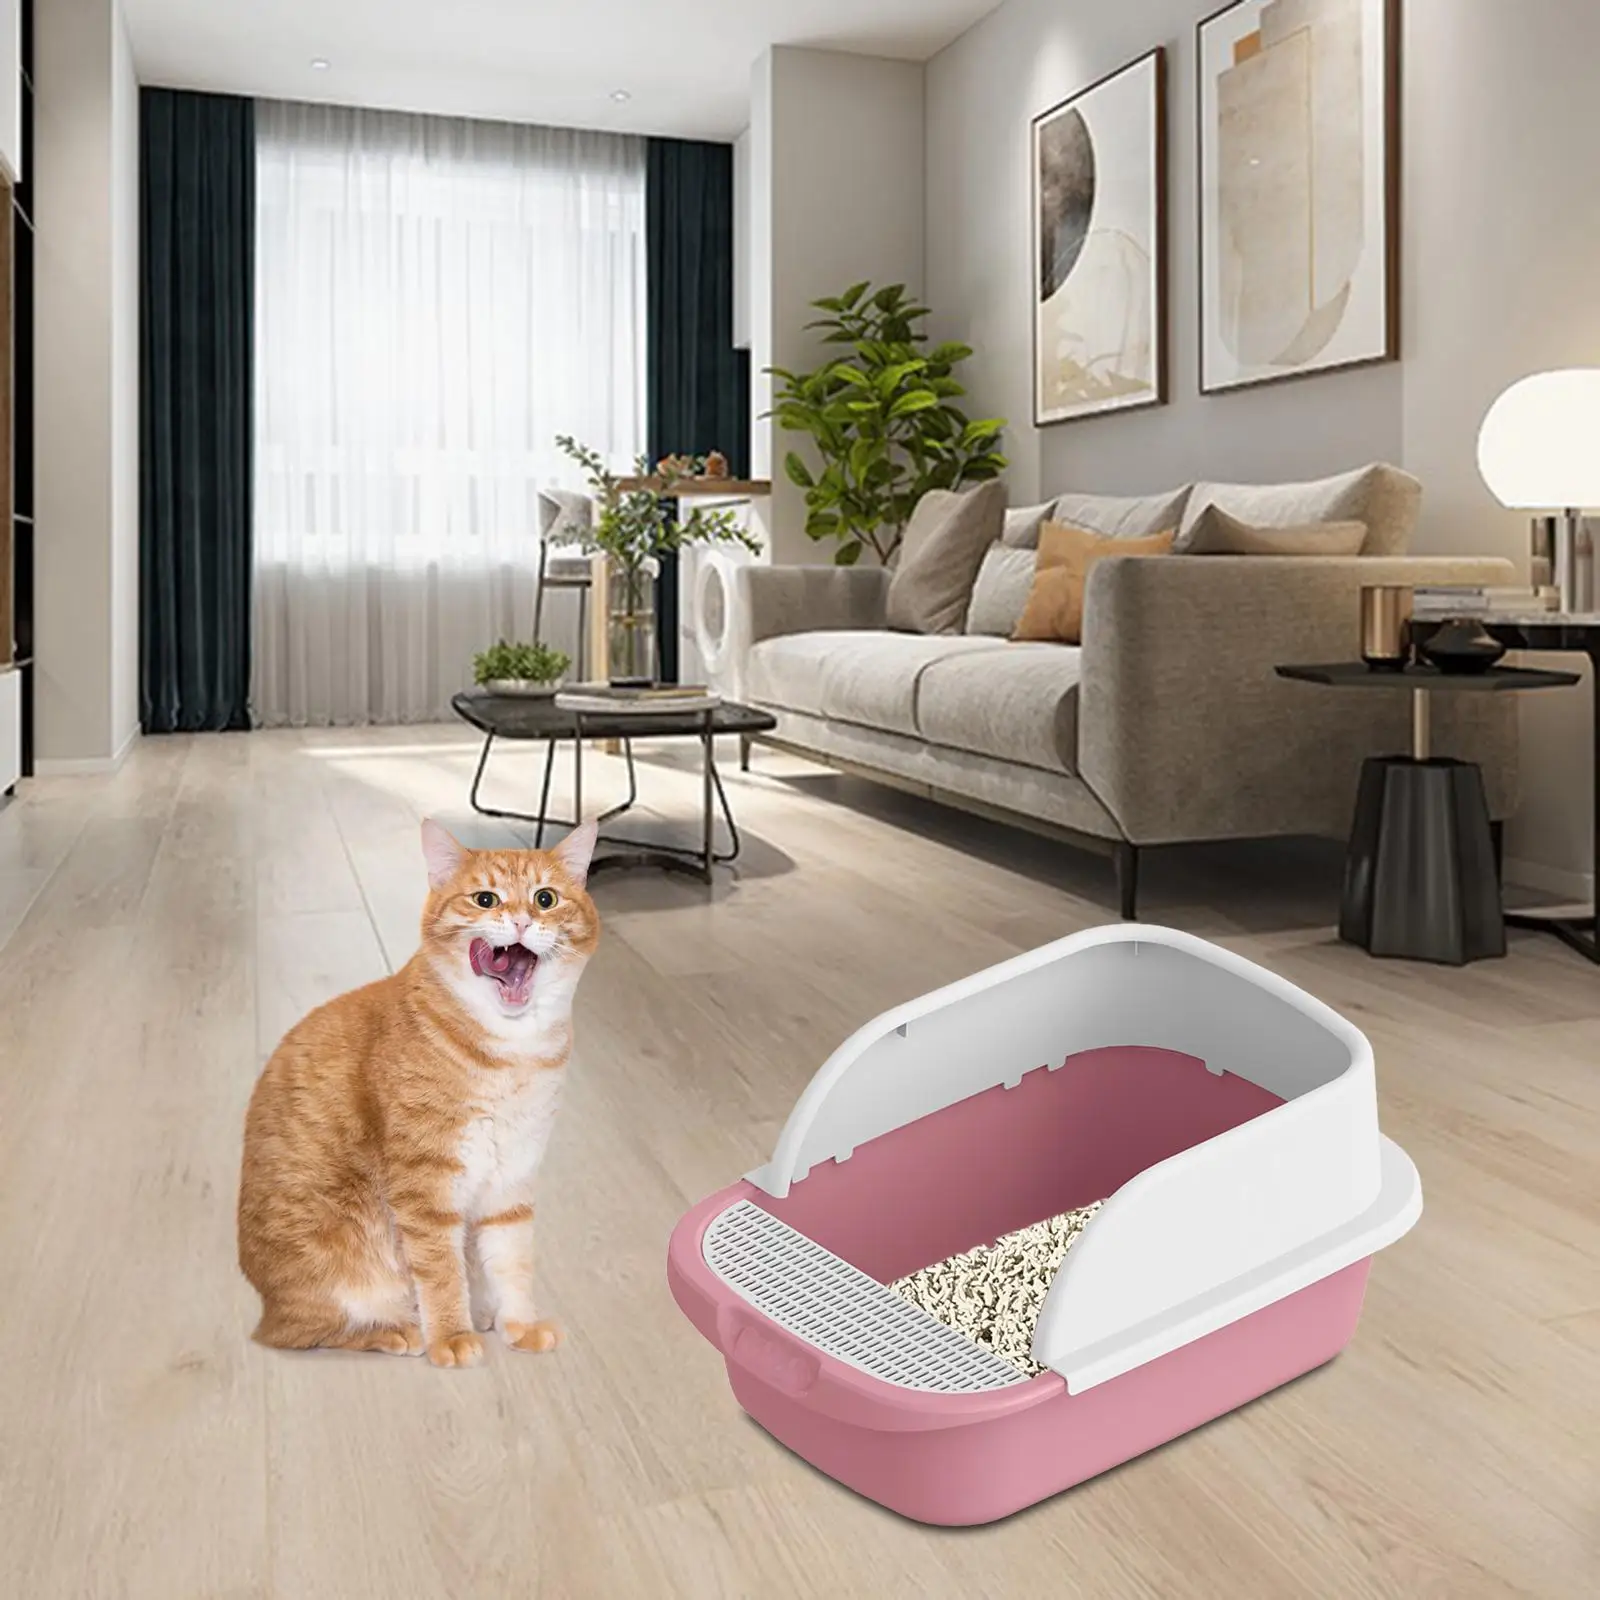 Pet Cat Litter Box Toilet Removable Semi Enclosed Large Space Durable Splashproof Sandbox Tray for Kitten Pet Supplies